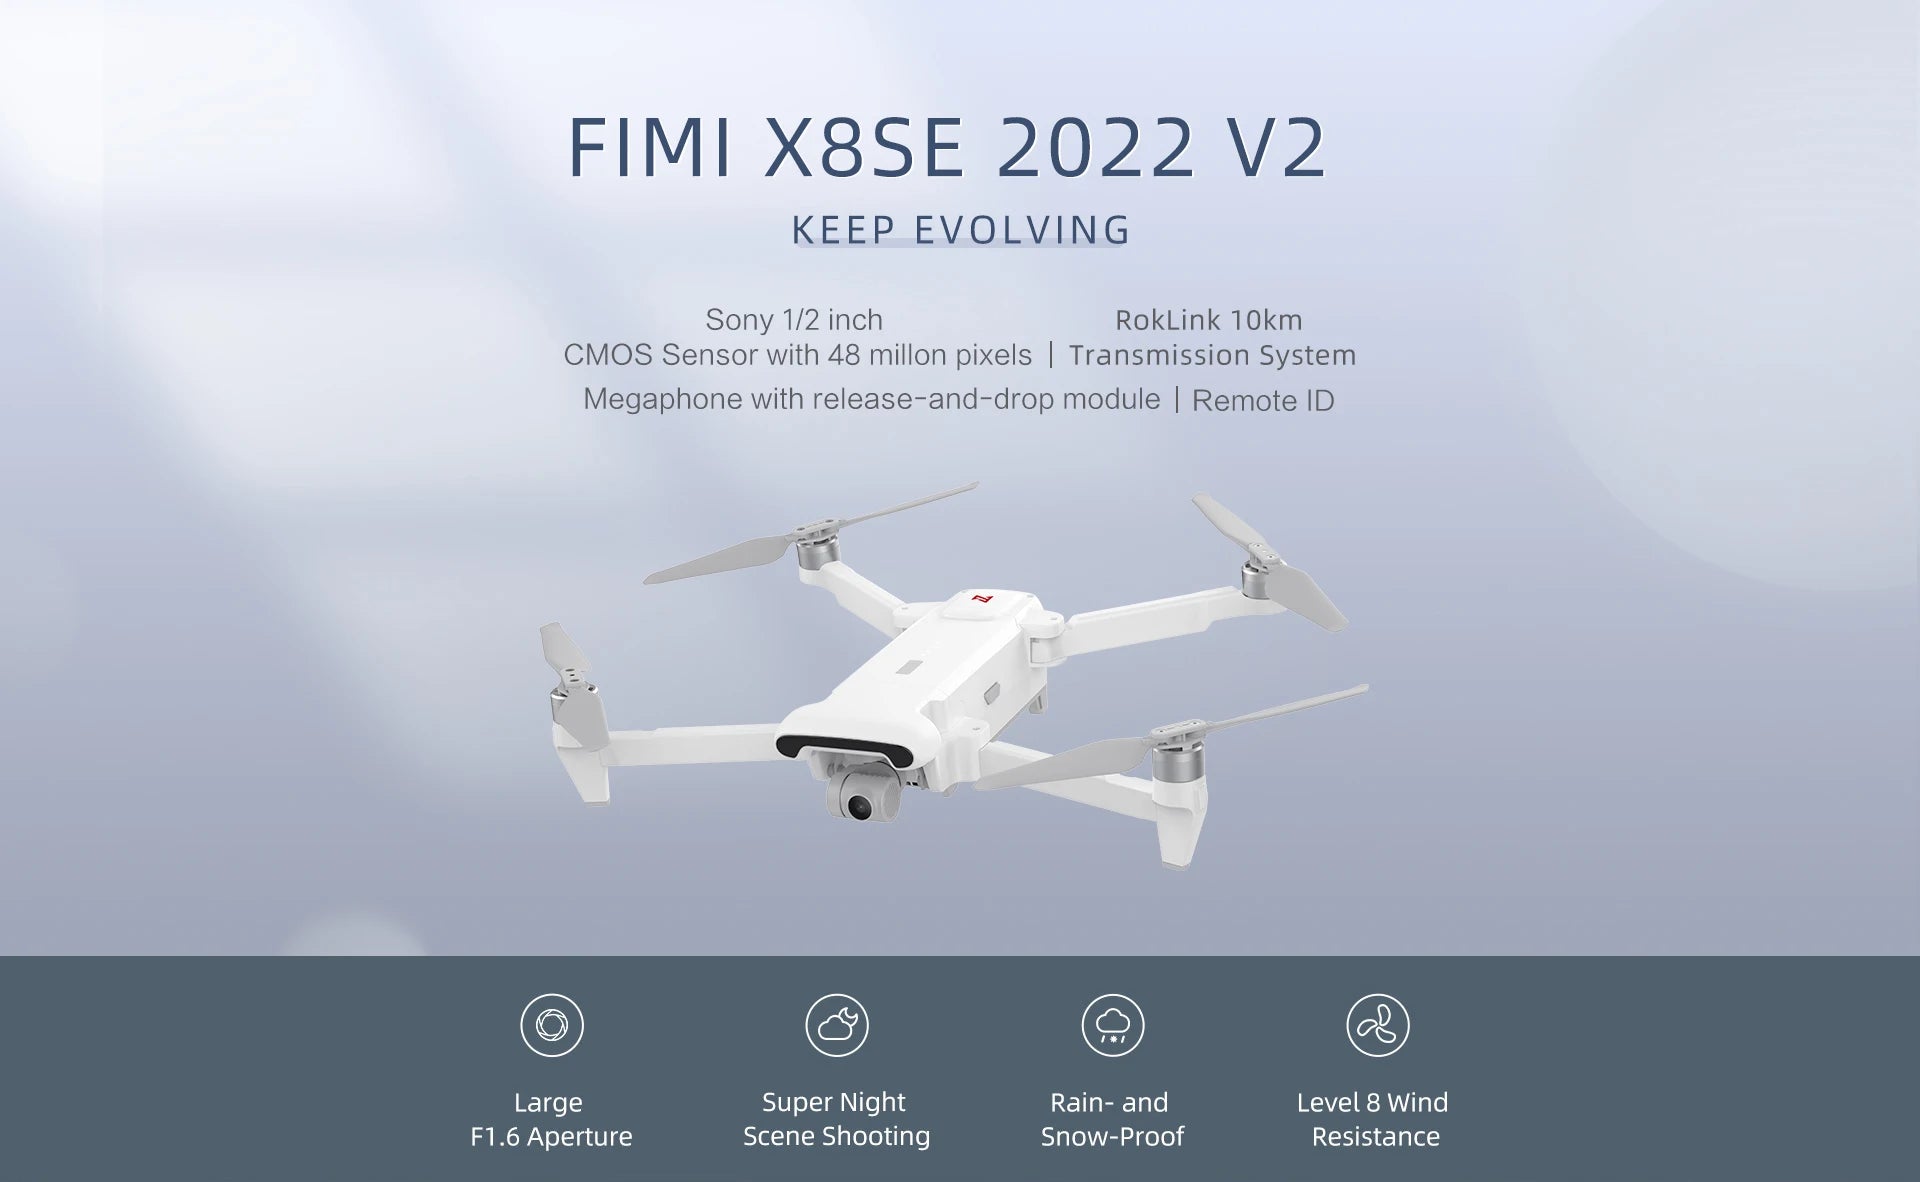 FIMI X8SE 2022 V2 Camera Drone, FIMI X8SE 2022 V2 KEEP EVOLVING Sony 1/2